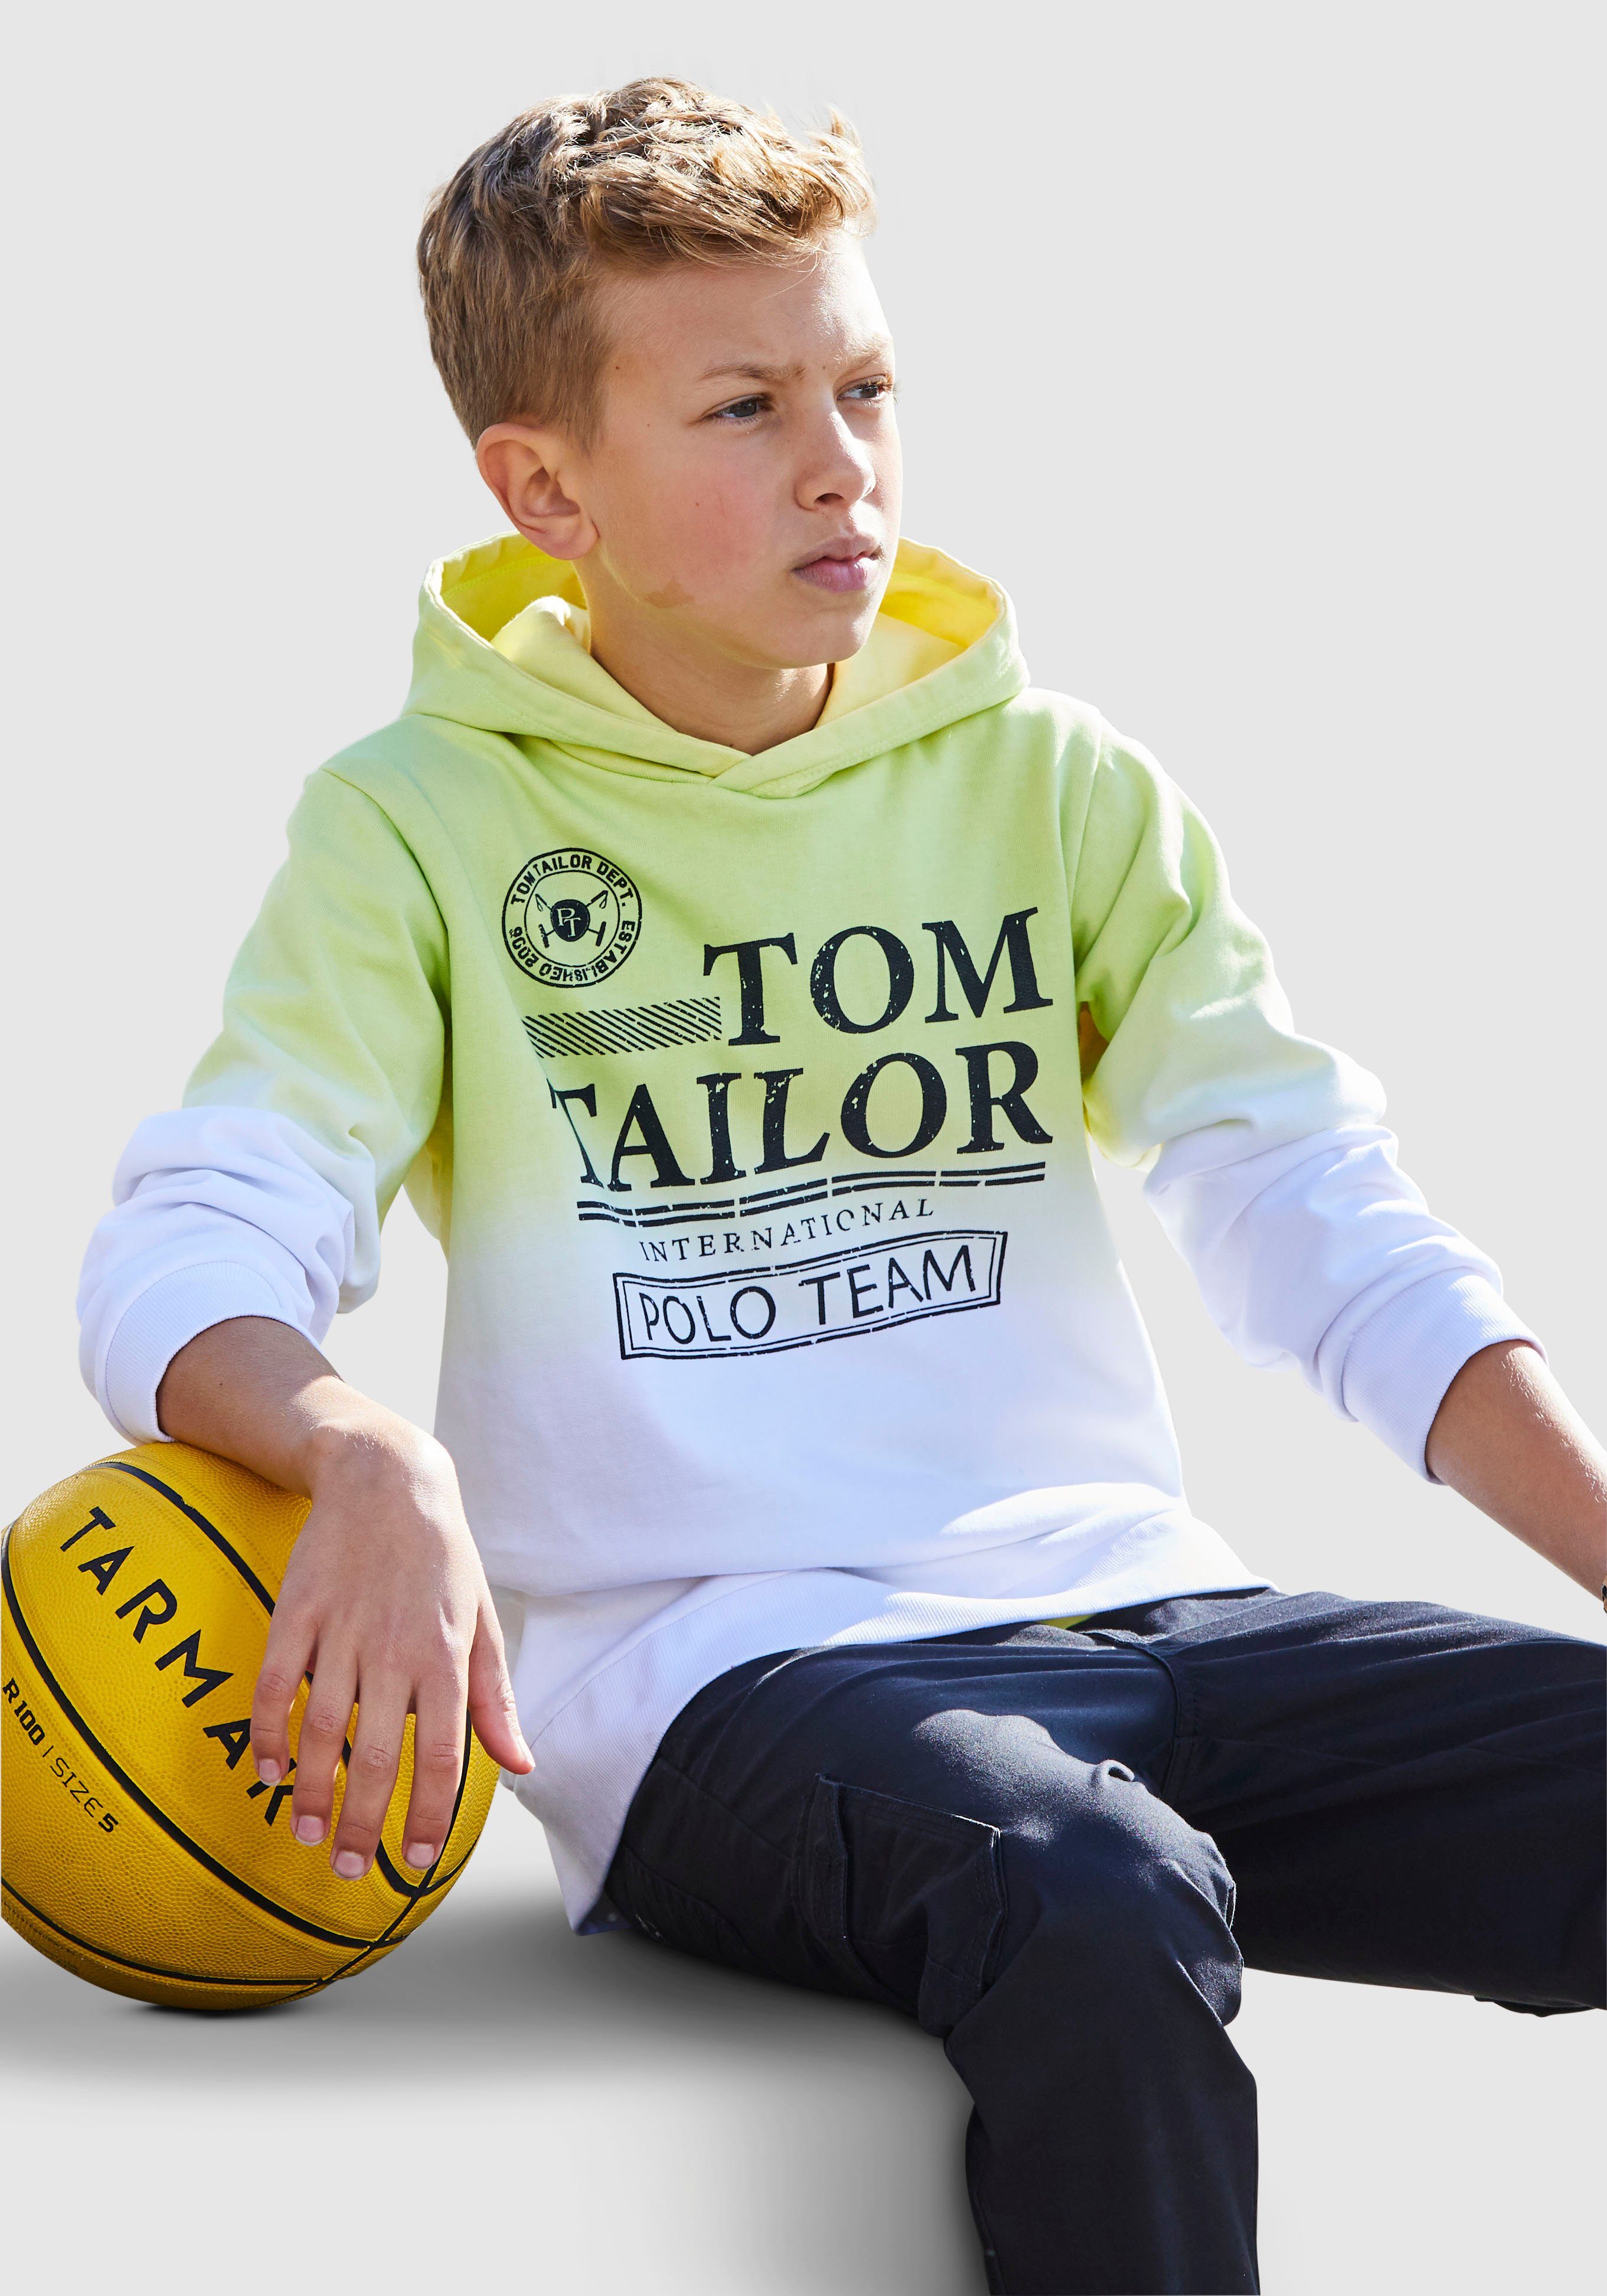 TOM TAILOR Polo Team Kapuzensweatshirt online kaufen | OTTO